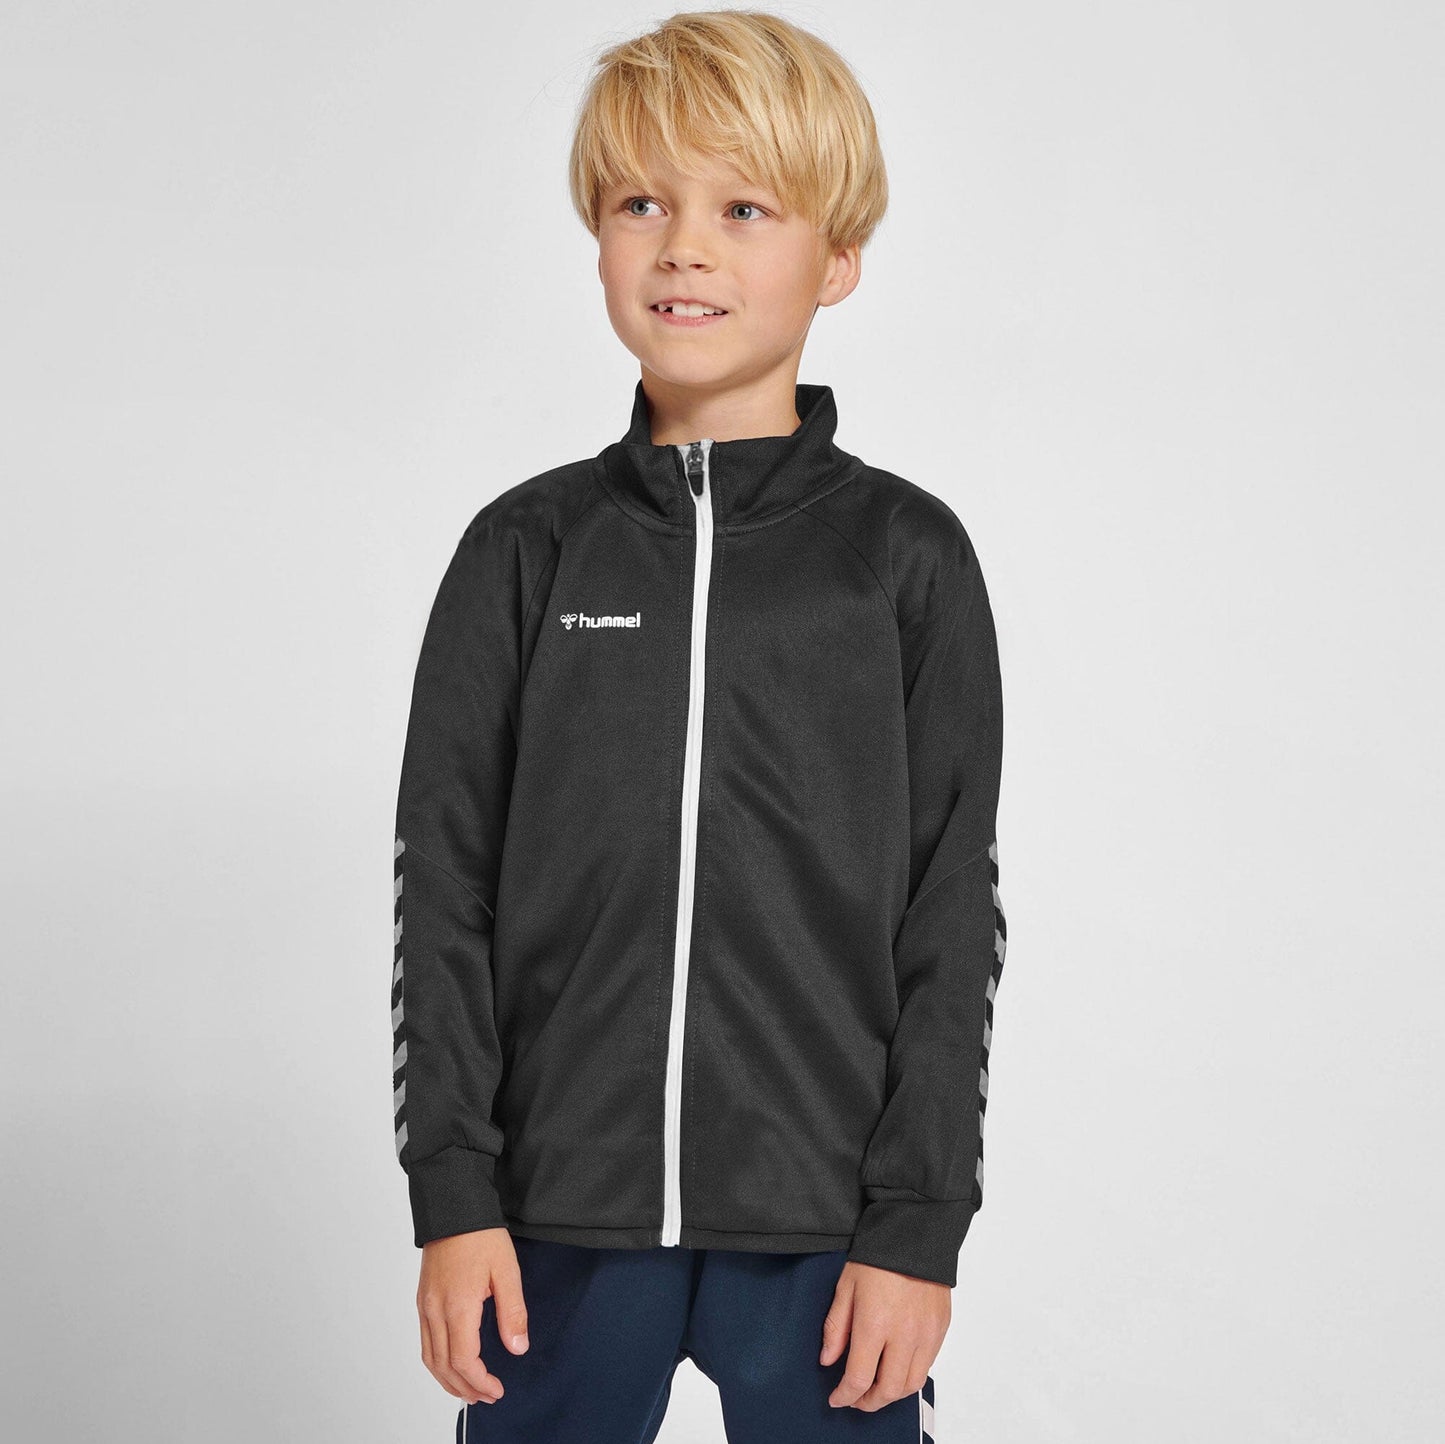 Hummel Boy's Foreman Arrow Printed Sports Zipper Jacket Boy's Jacket HAS Apparel Black 4 Years 